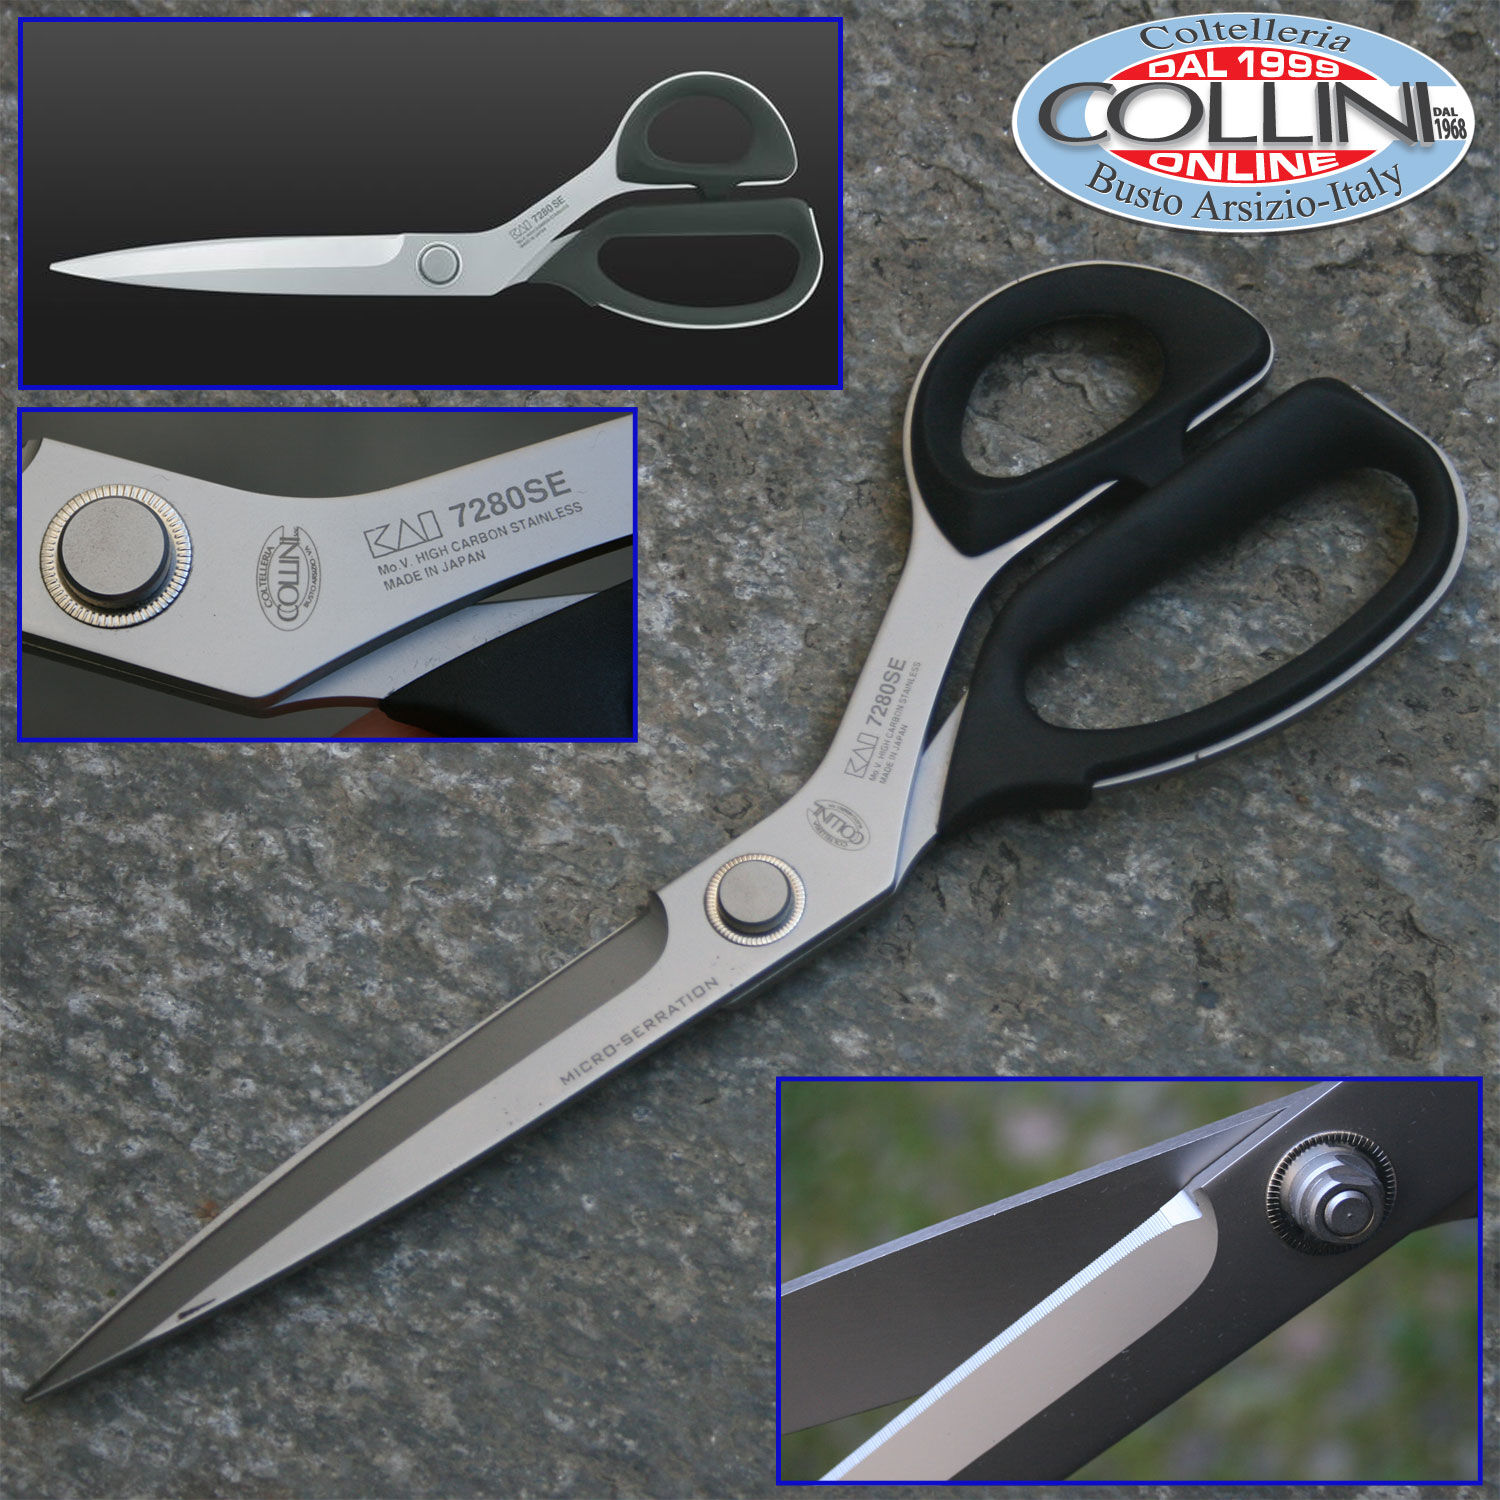 https://www.coltelleriacollini.com/media/catalog/product/cache/2d742e981ffa5c28990fe05a9b6044c9/image/83163968/kai-professional-tailoring-scissors-28-cm-7280-se-microtoothed-blade.jpg